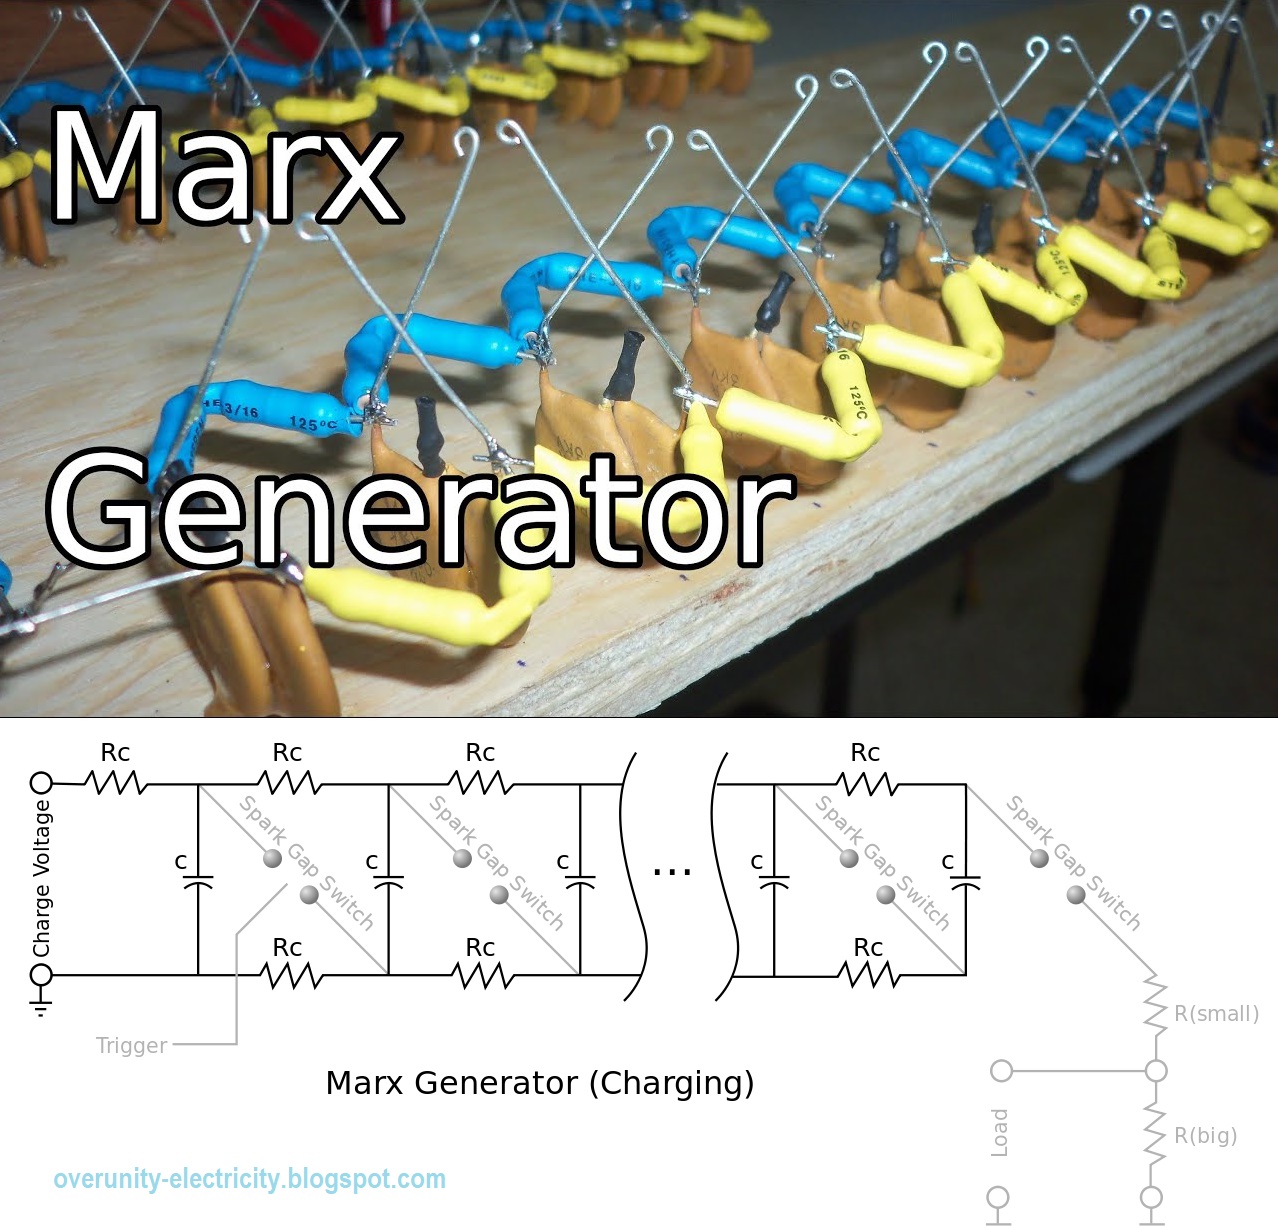 Marx generator Circuit diagram and actual model are homemade